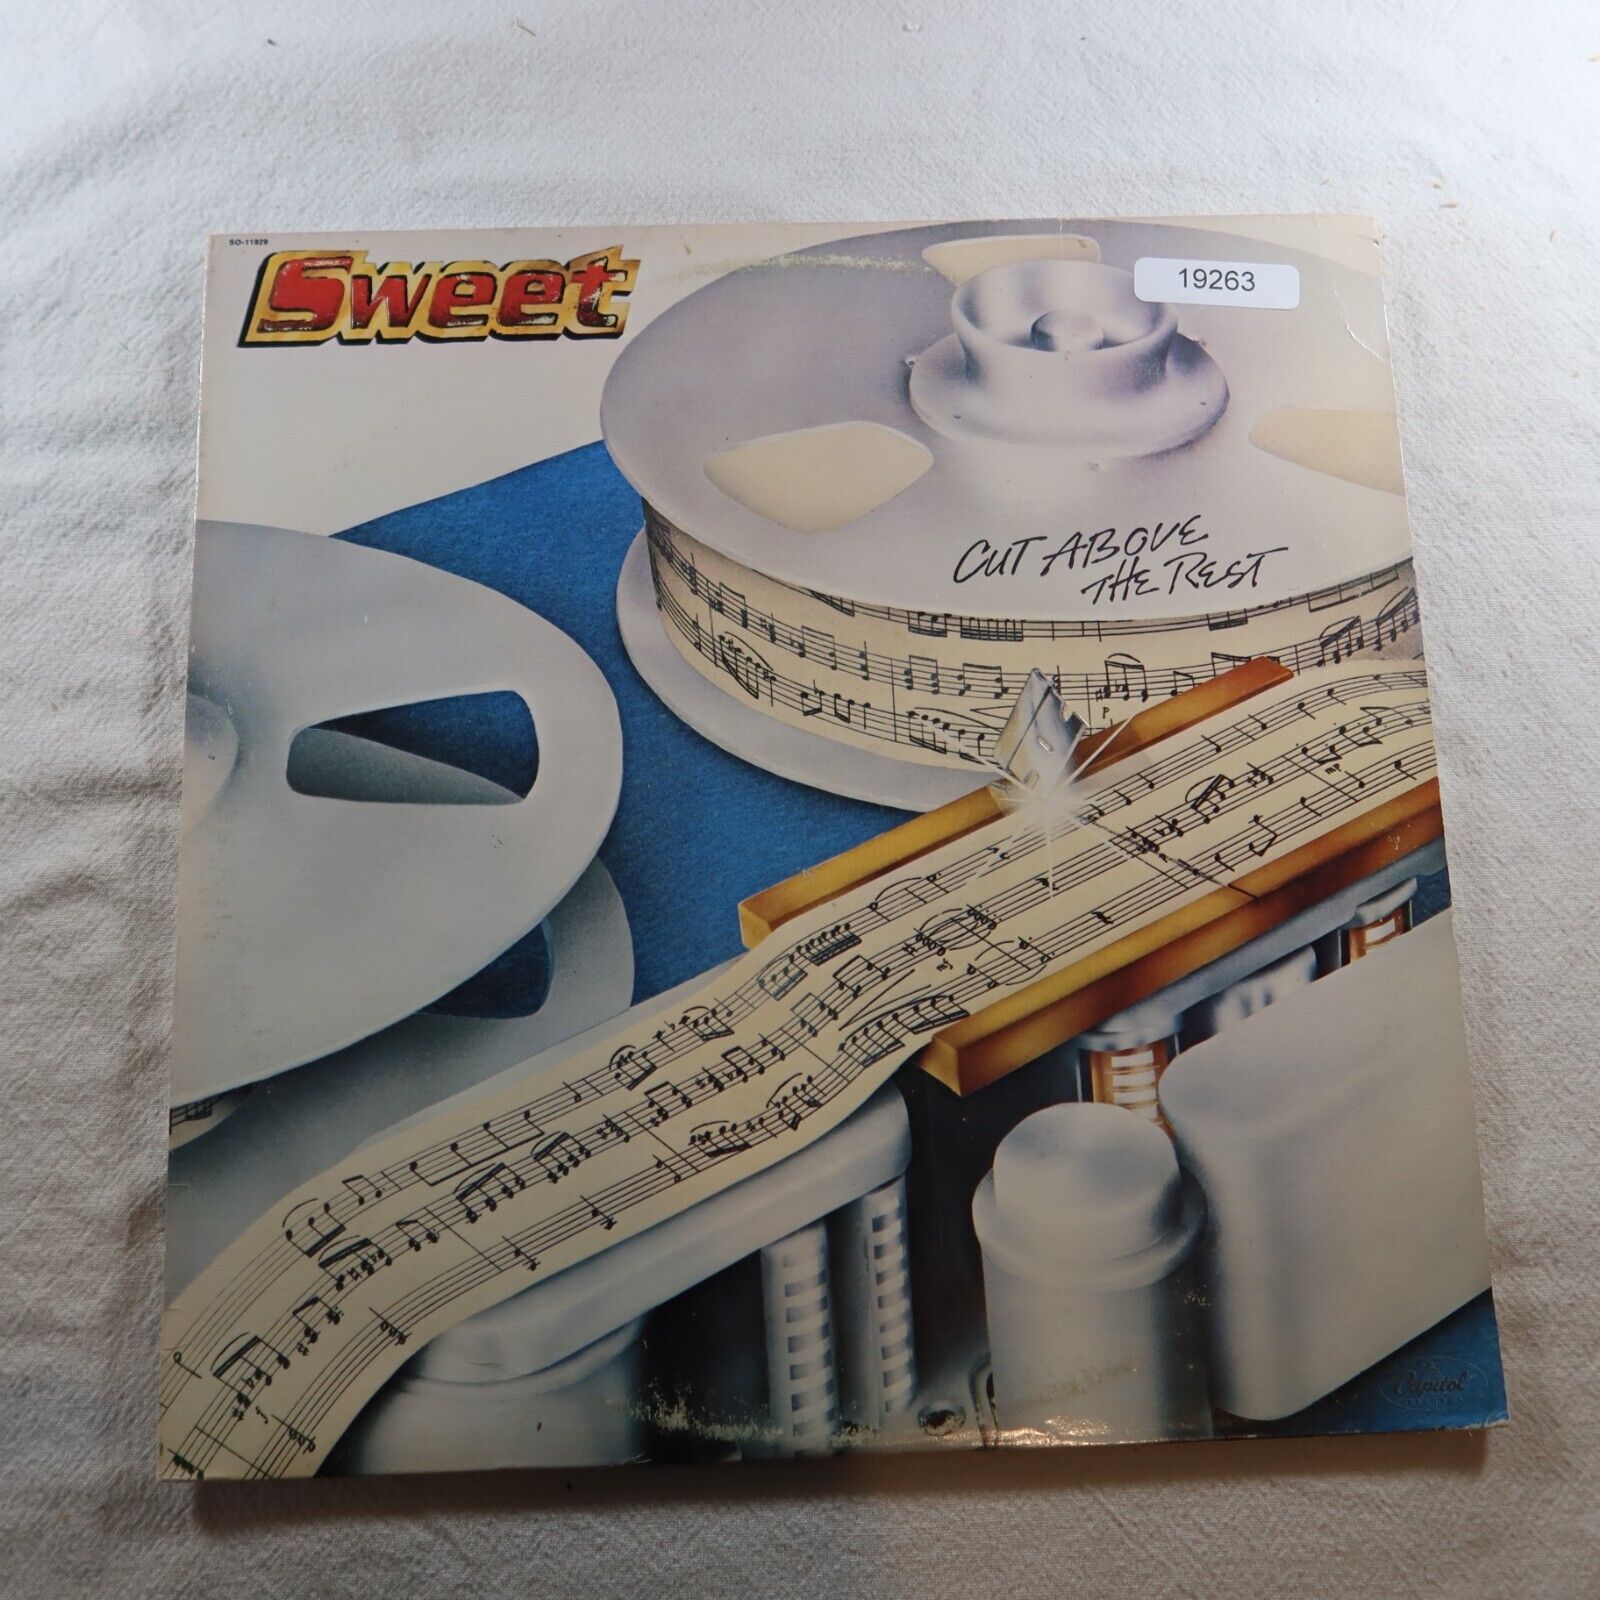 Sweet Cut Above The Rest   Record Album Vinyl LP